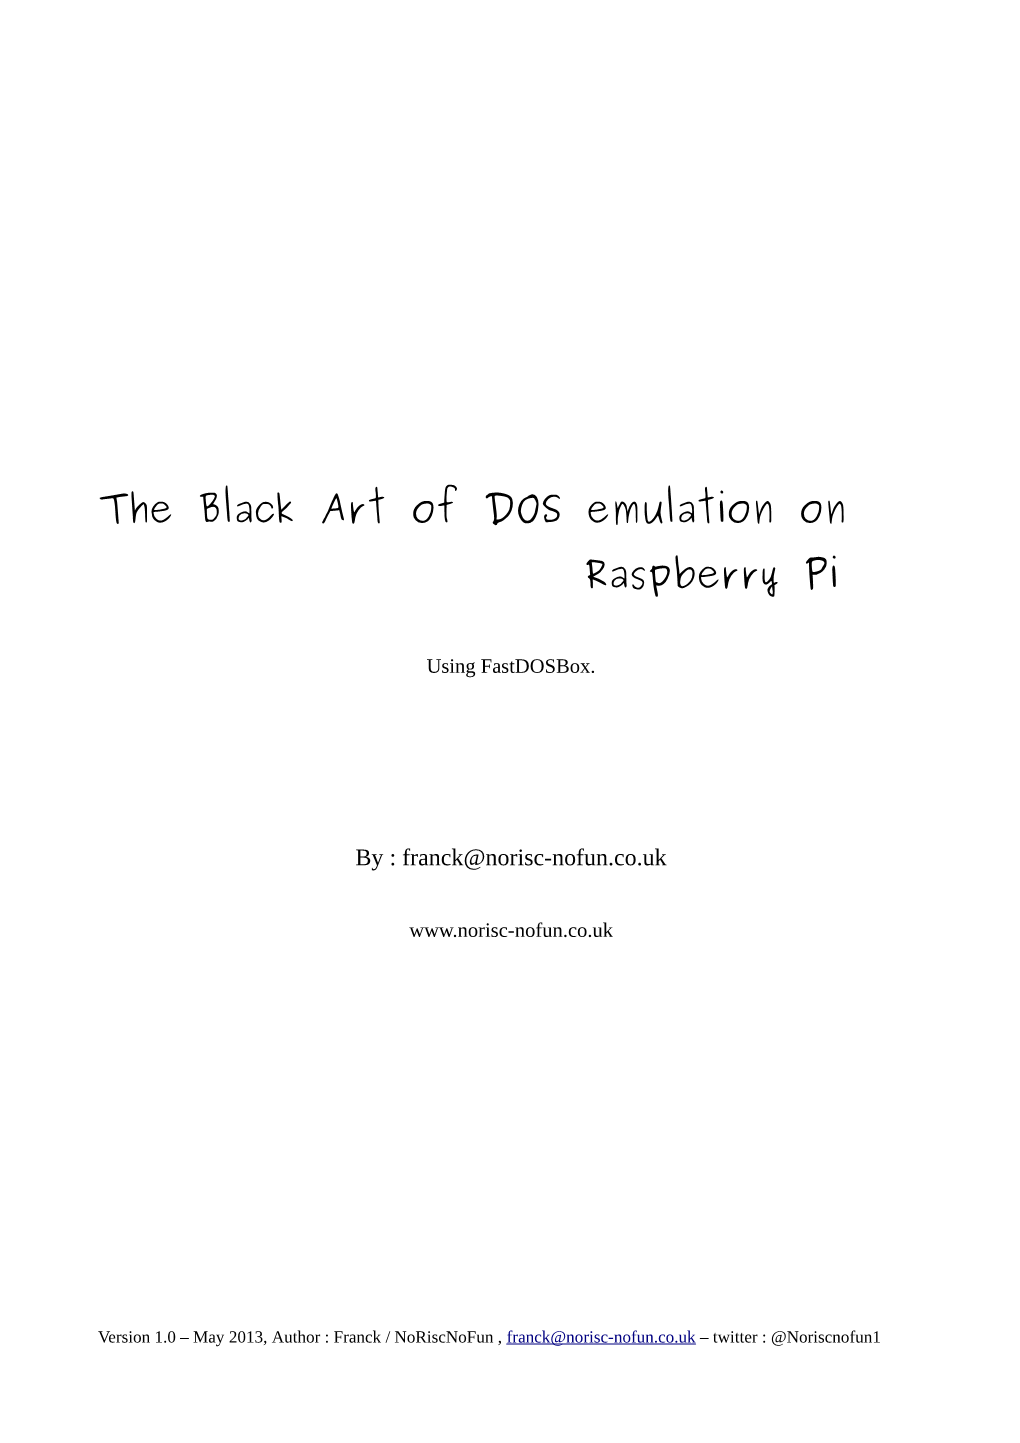 The Black Art of DOS Emulation on Raspberry Pi